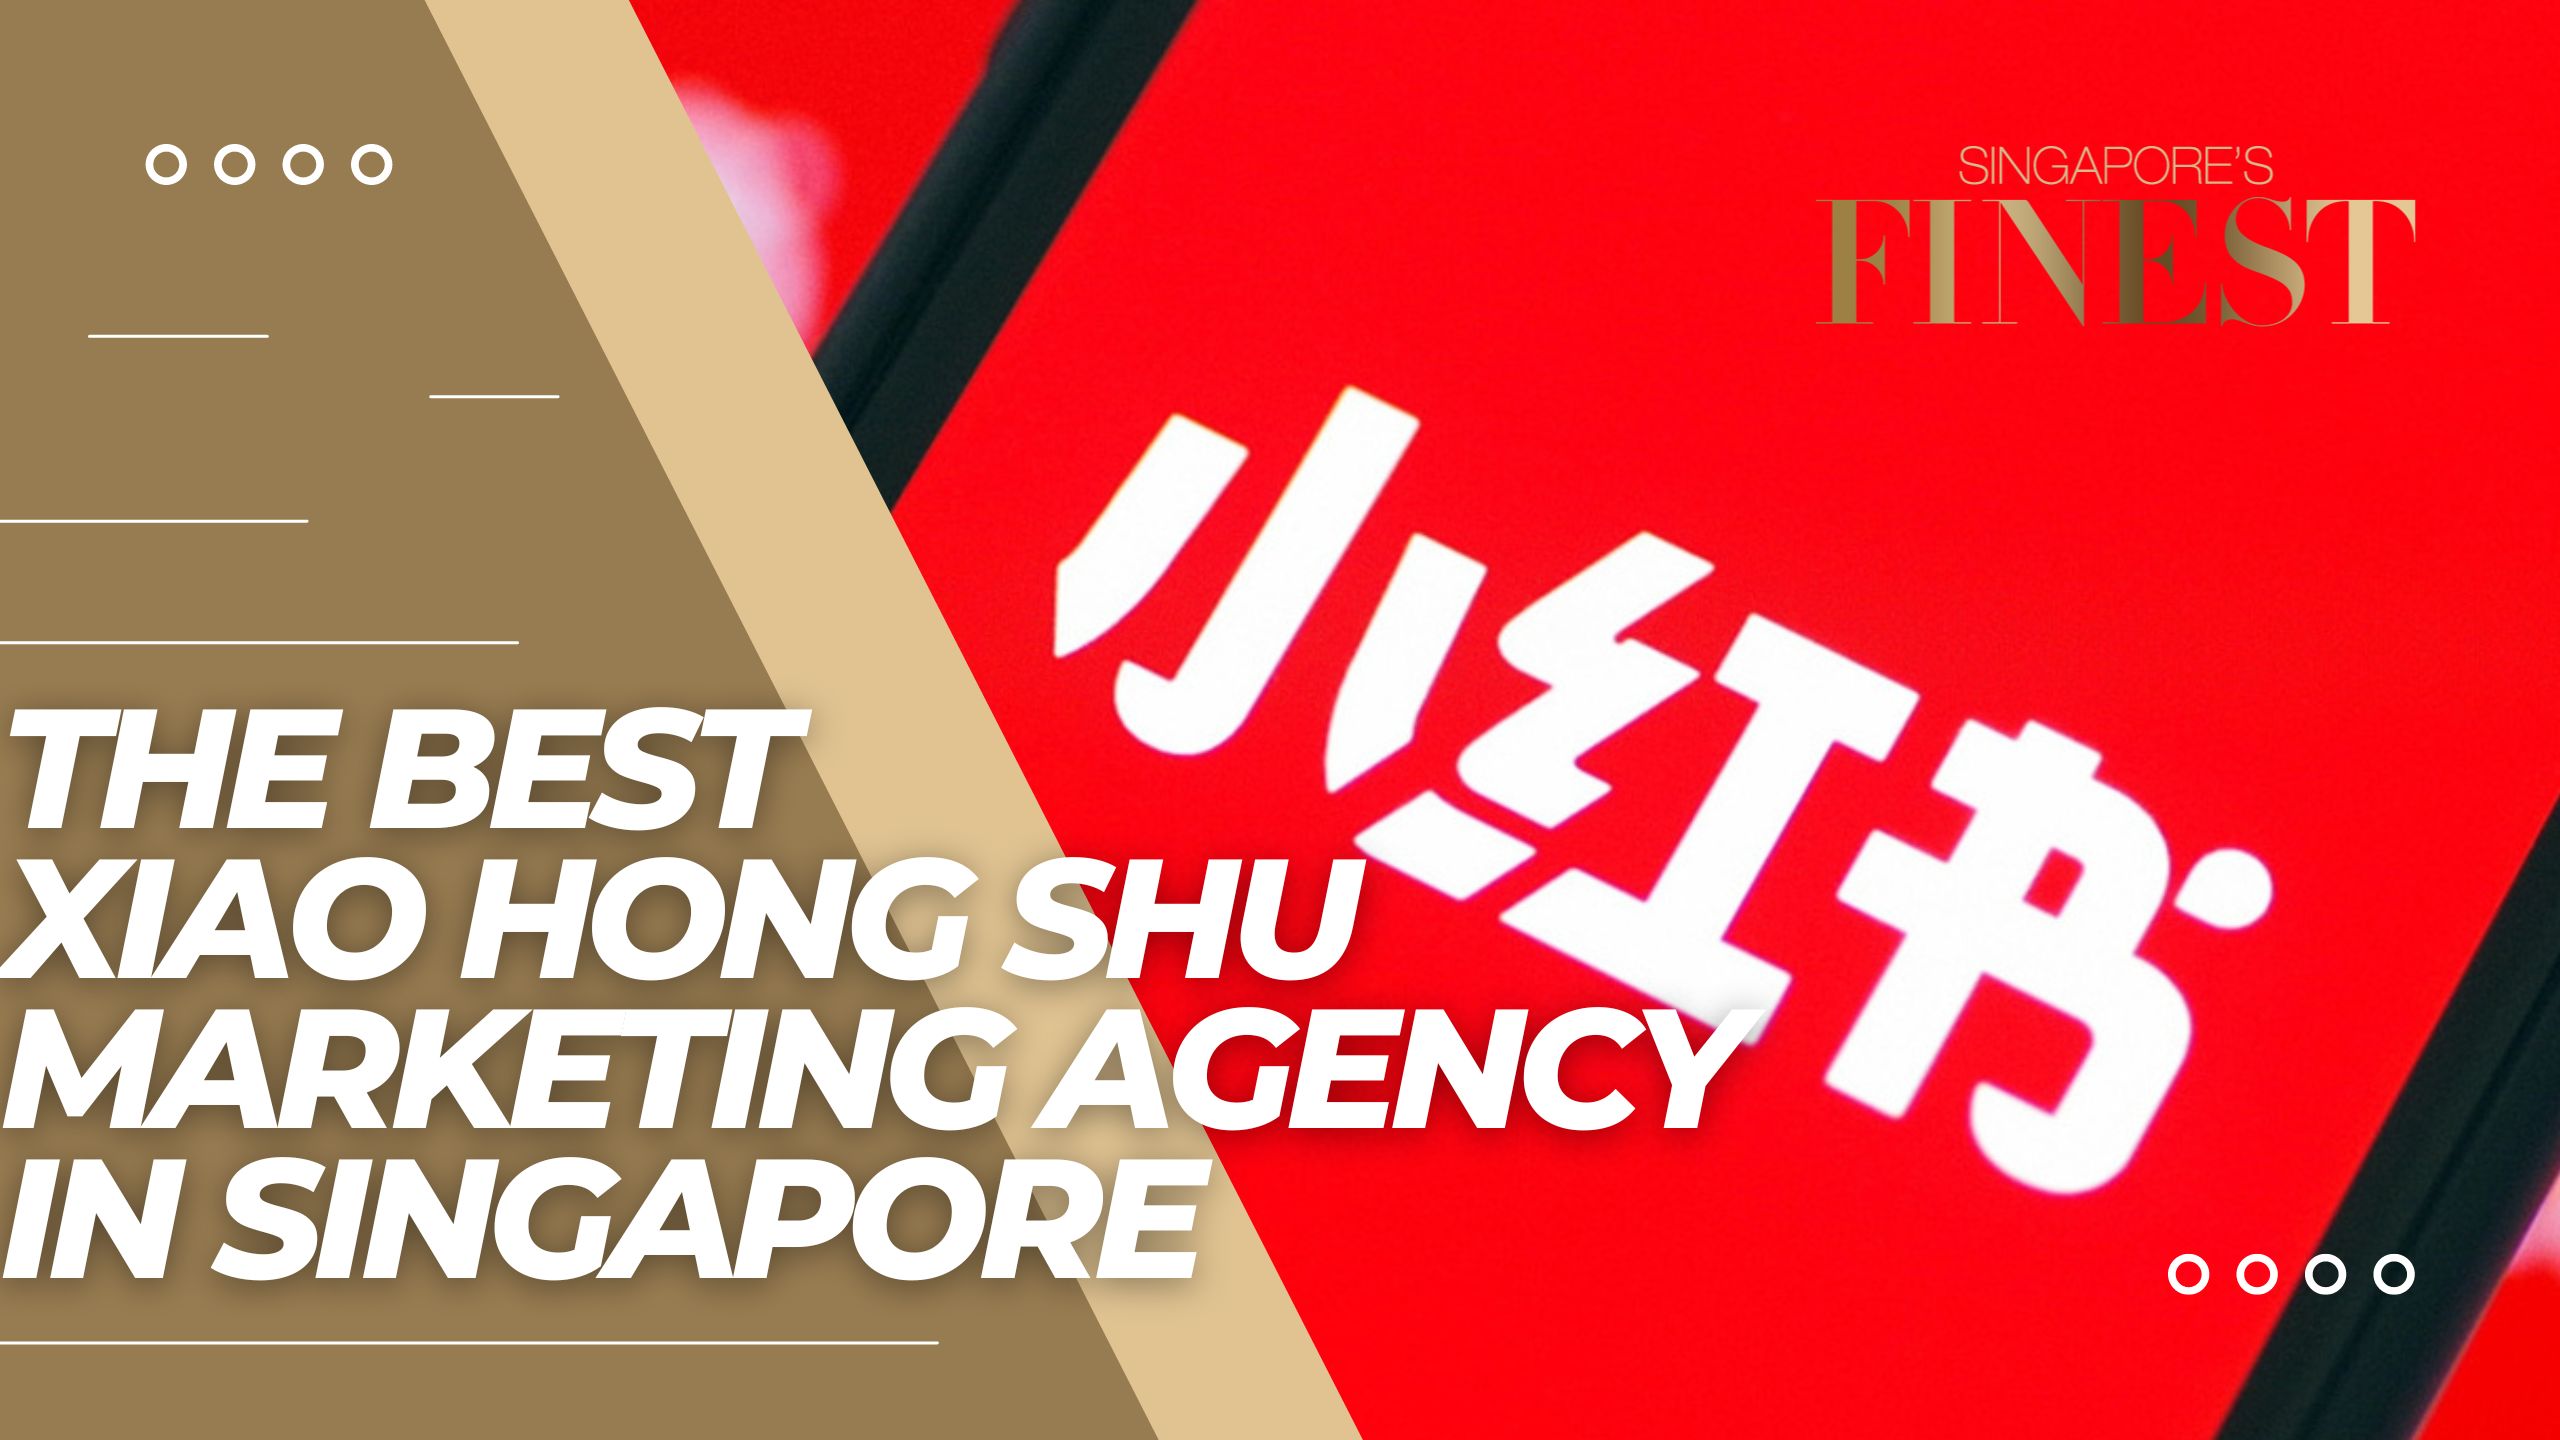 The Finest Xiaohongshu Marketing Agency in Singapore